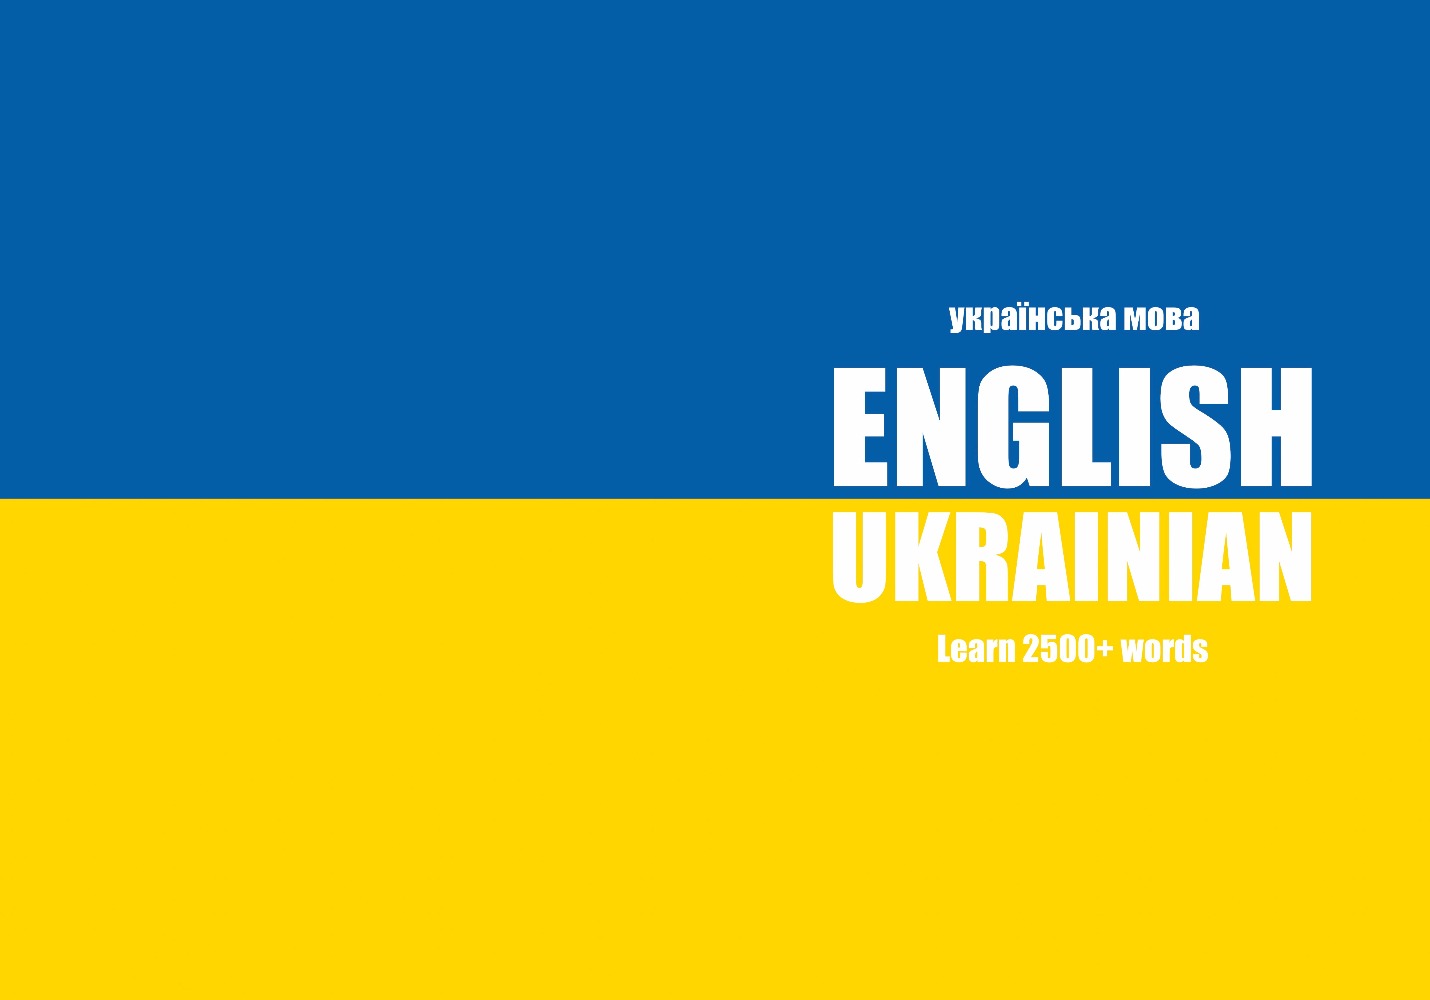 Ukrainian language notebook cover